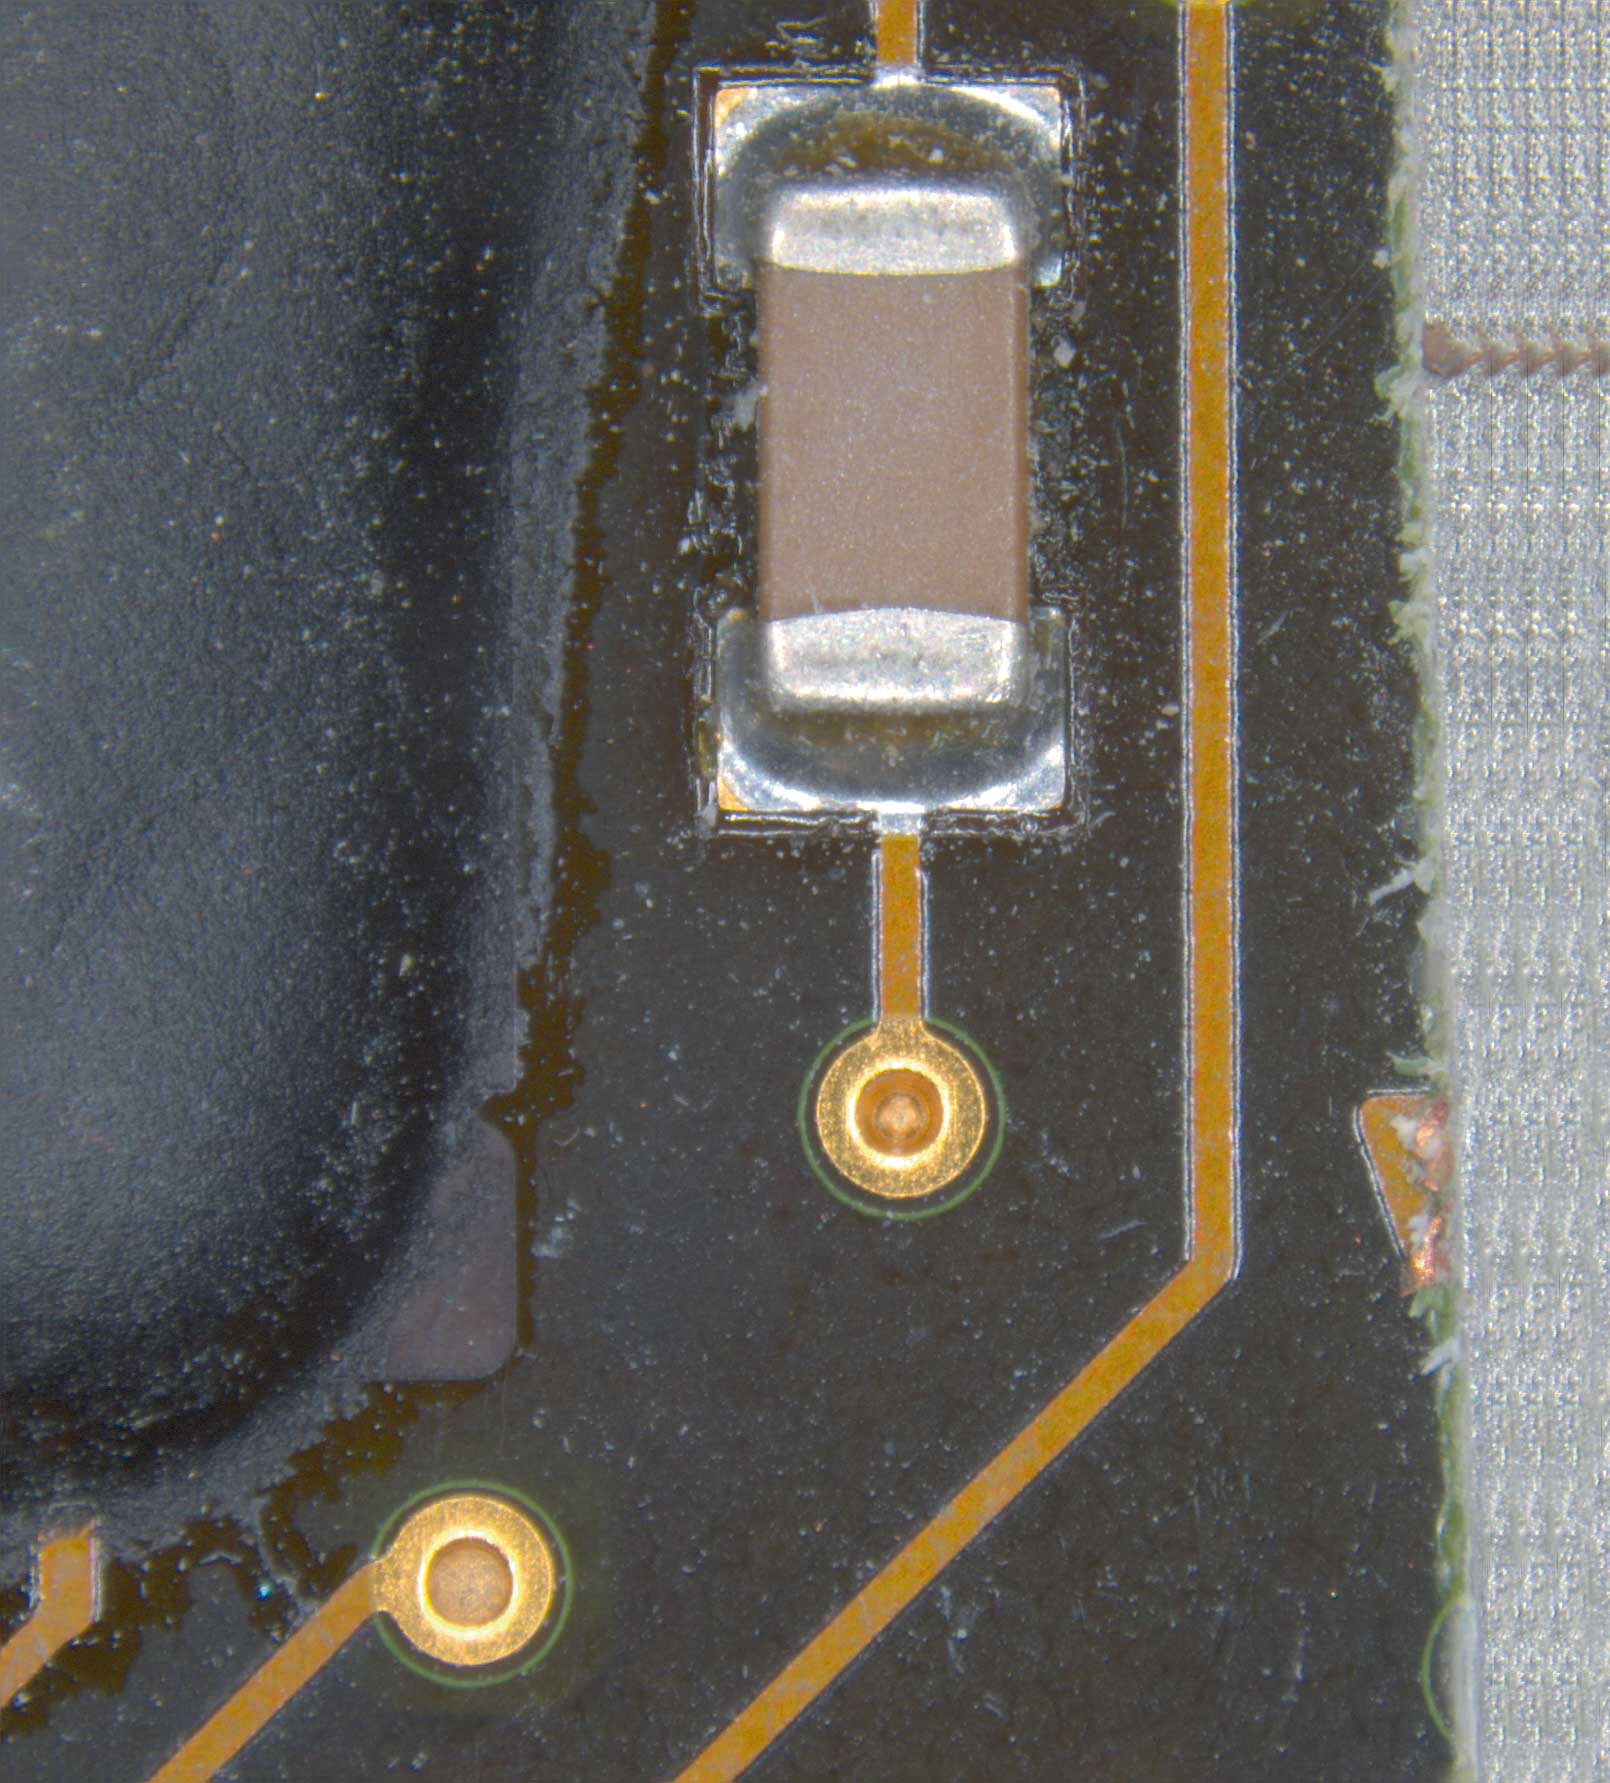 Componente de placa de circuitos impresos, campo oscuro de luz reflejada, aumento: 7,5x​ 